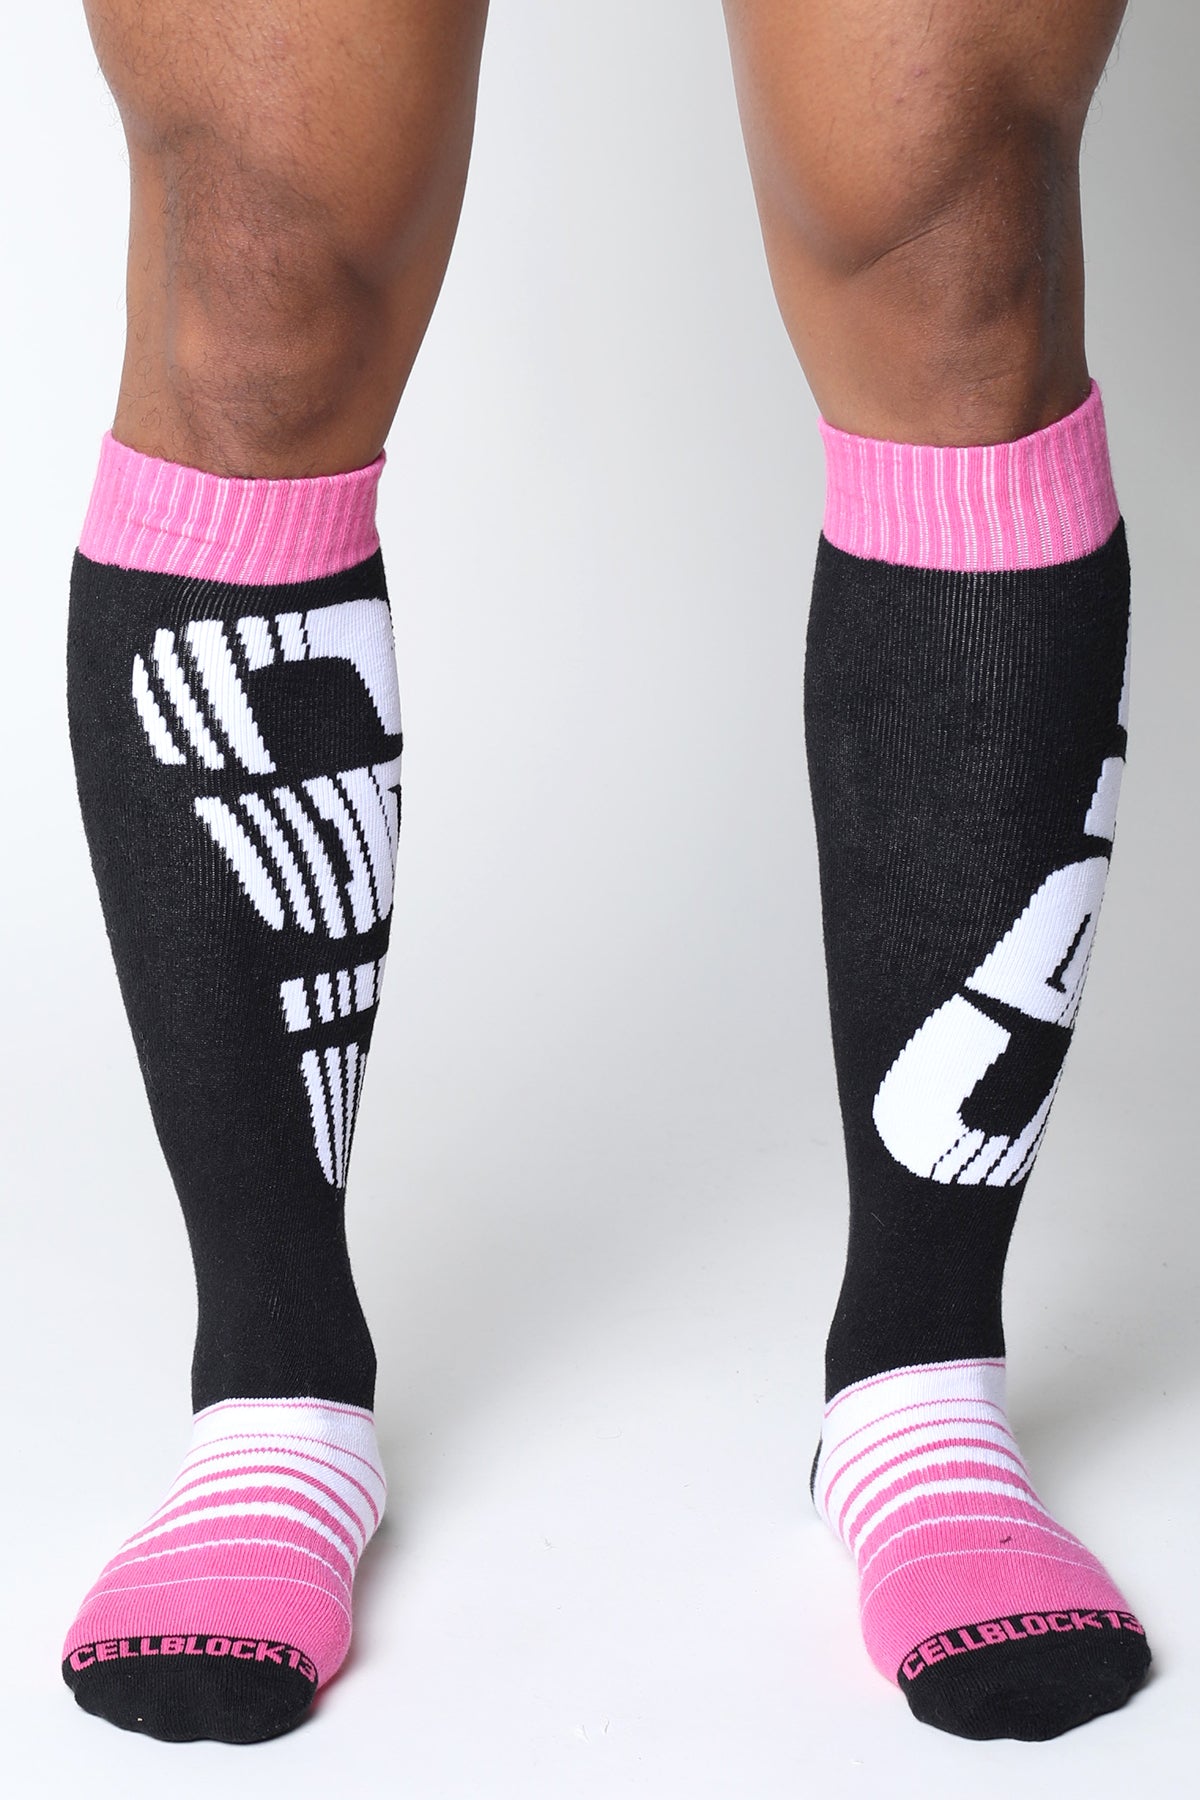 ST Socks for Sale by Stevkogoods